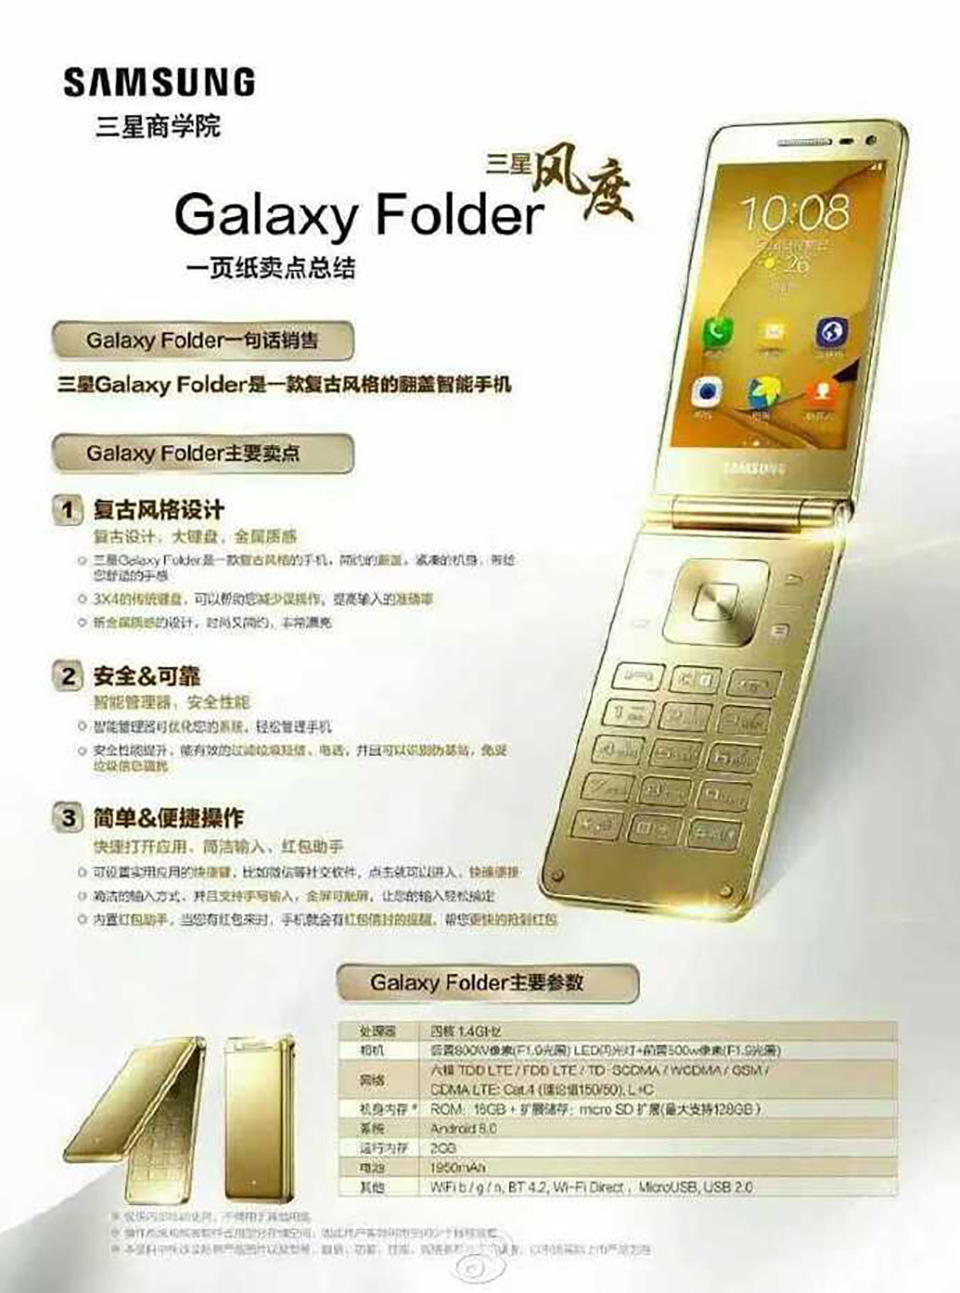 galaxy-folder-2-2.jpg